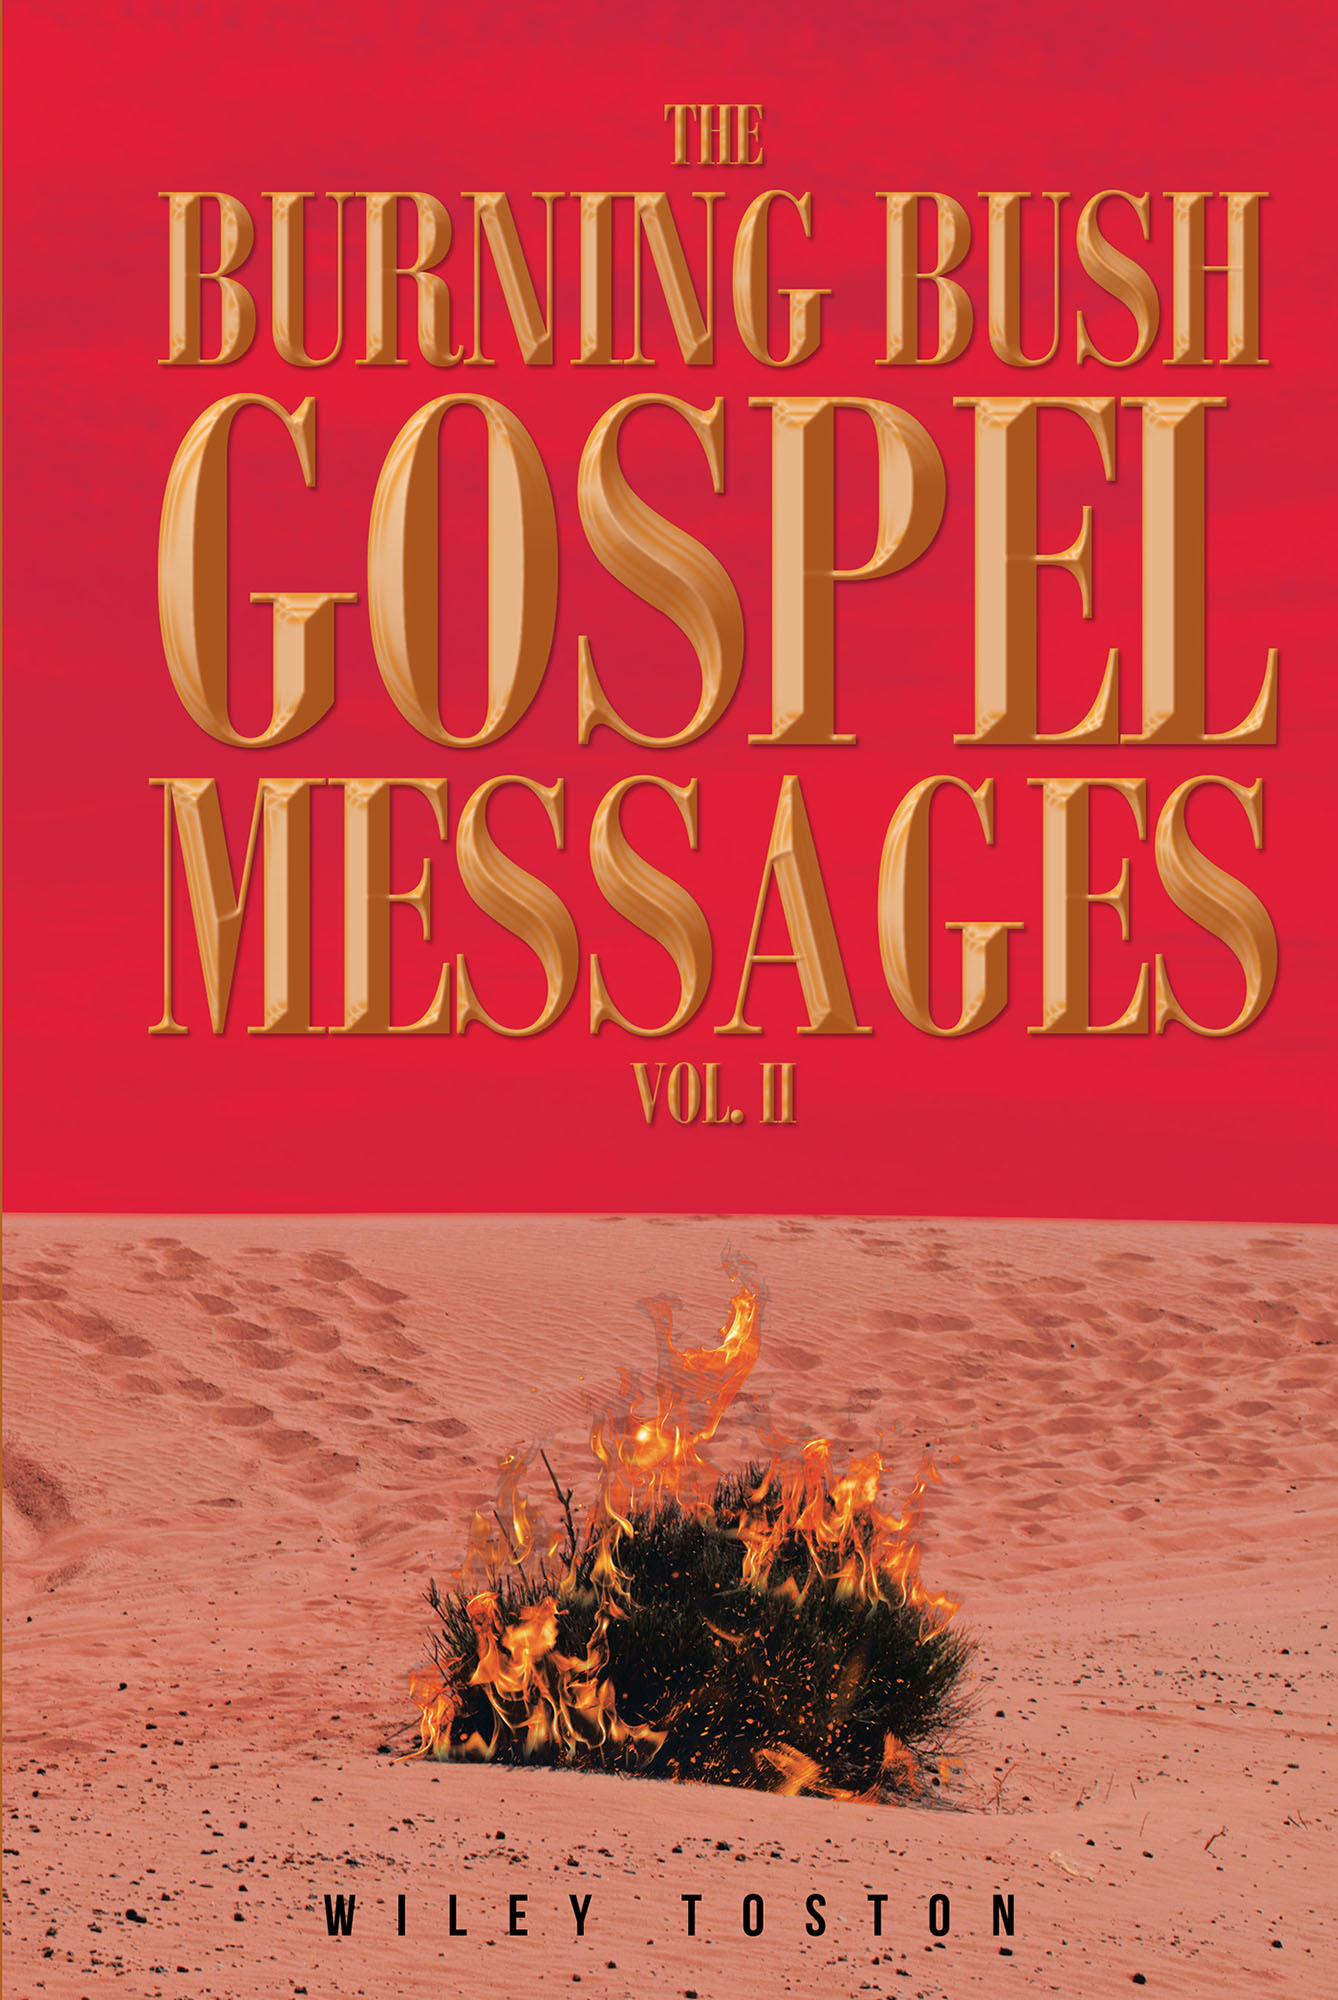 The Burning Bush Gospel Messages Vol. II Cover Image